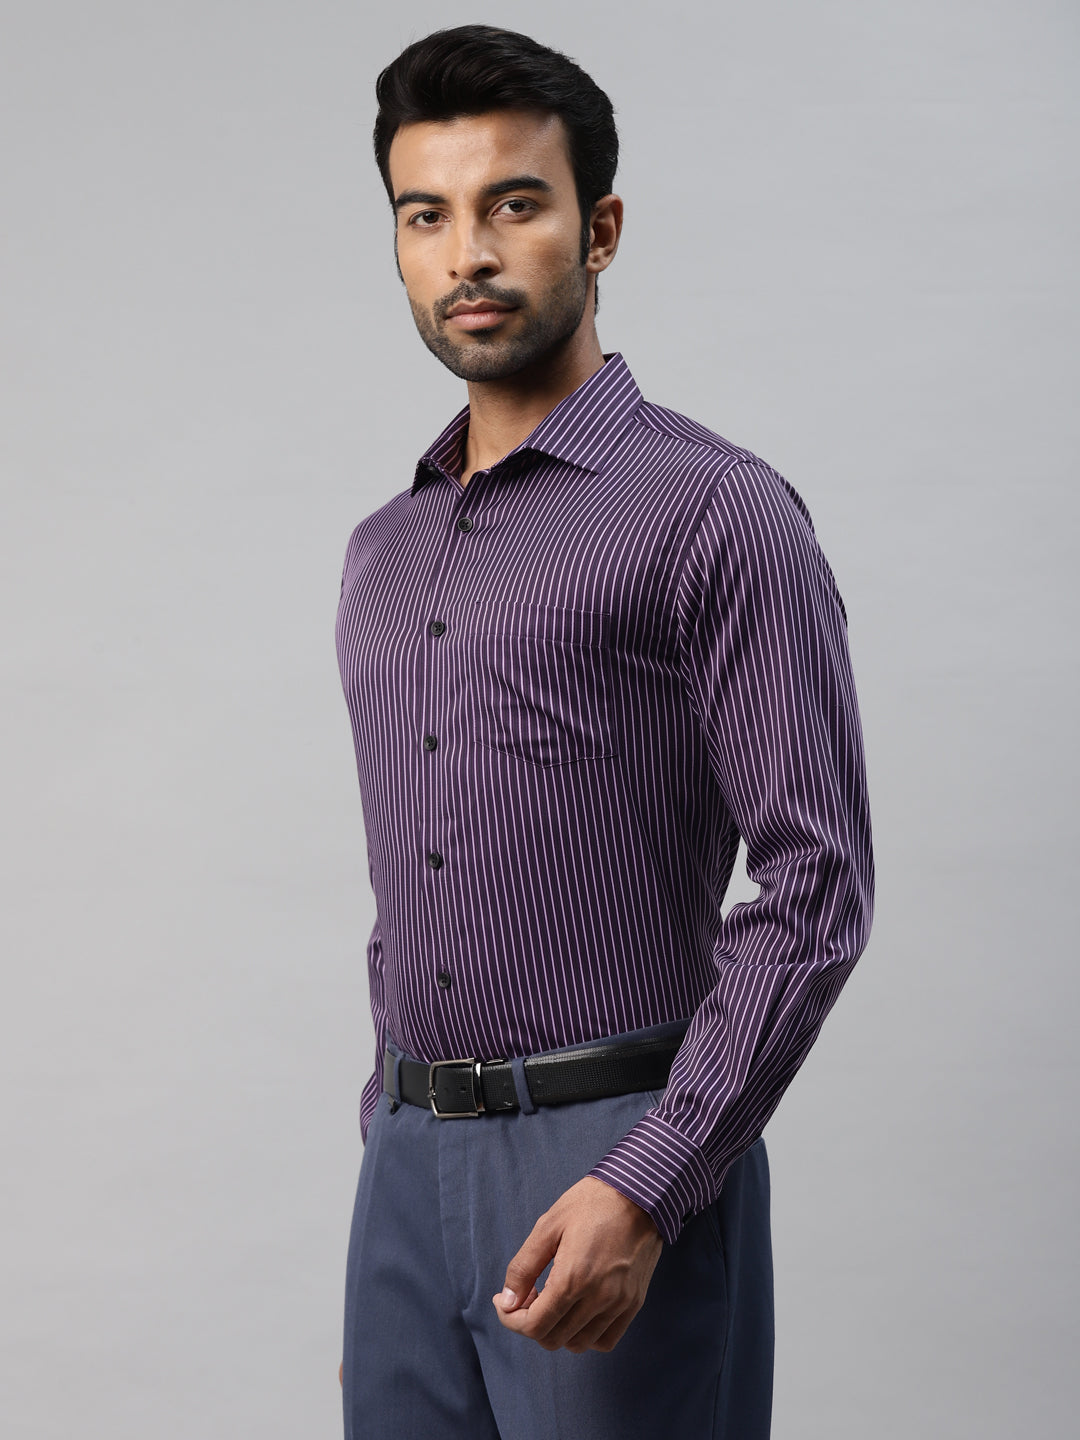 Don Vino Men's Black with Purple Stripes Slim Fit Shirt